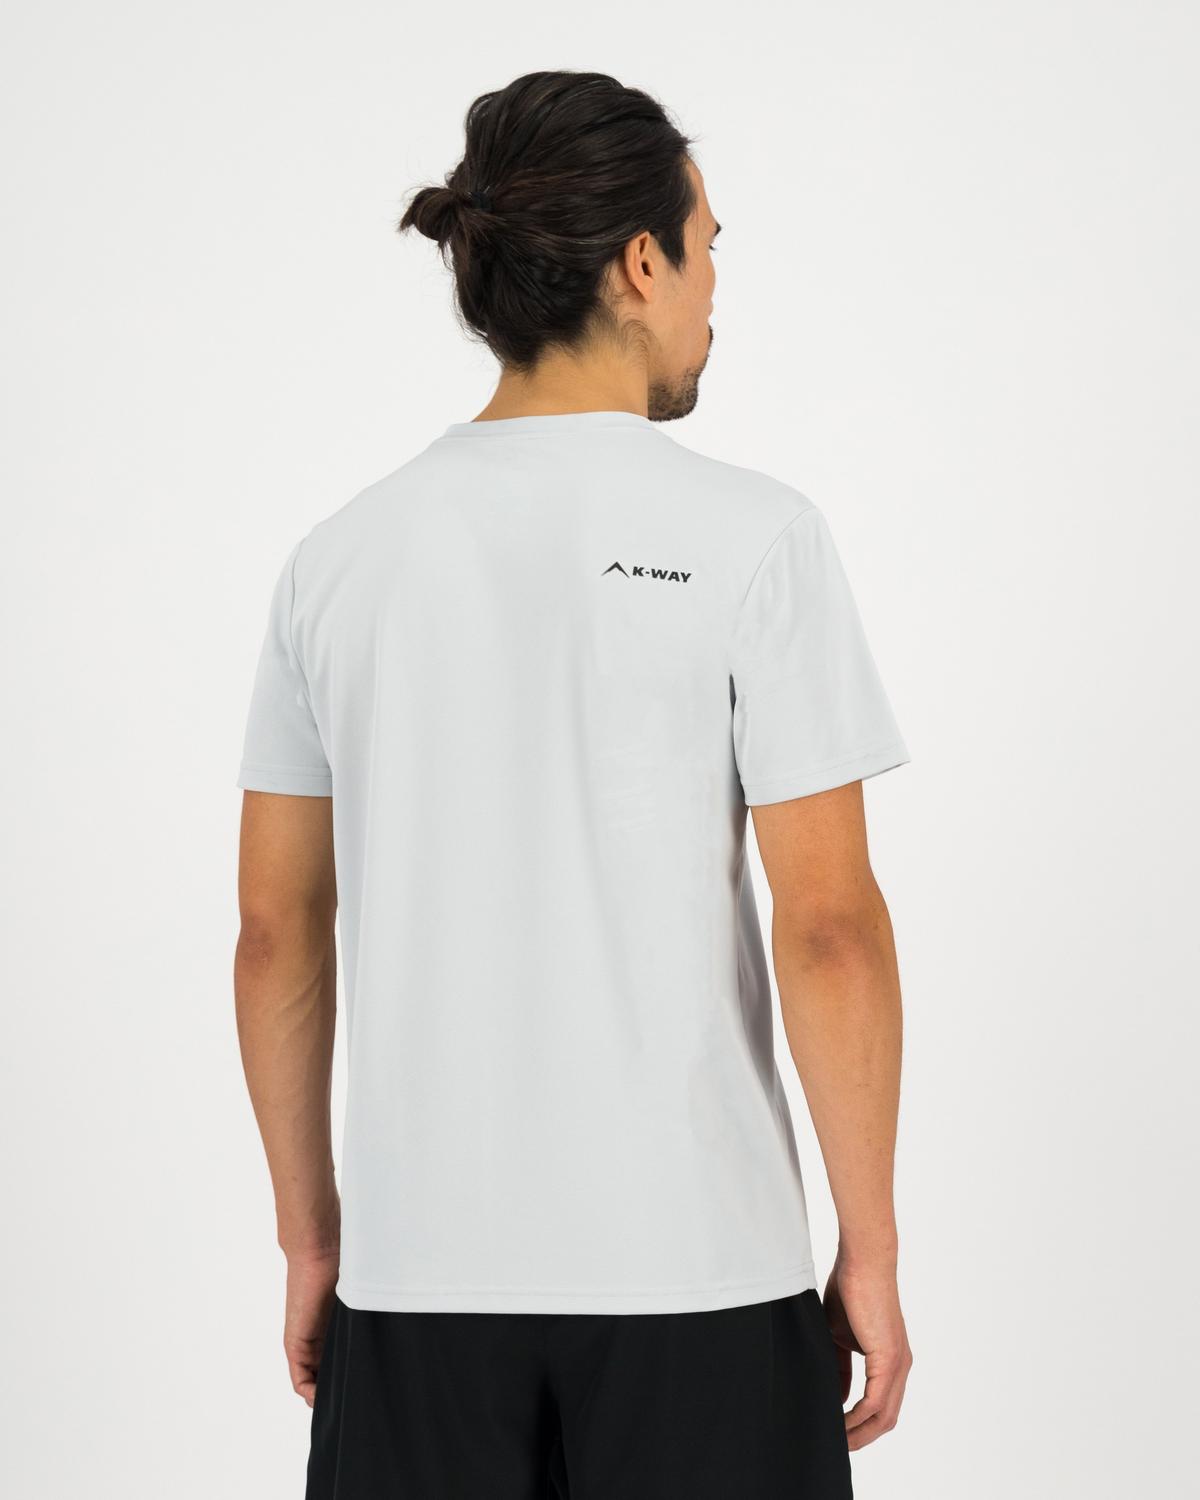 K-Way Men’s Basic Trail T-Shirt -  Silver